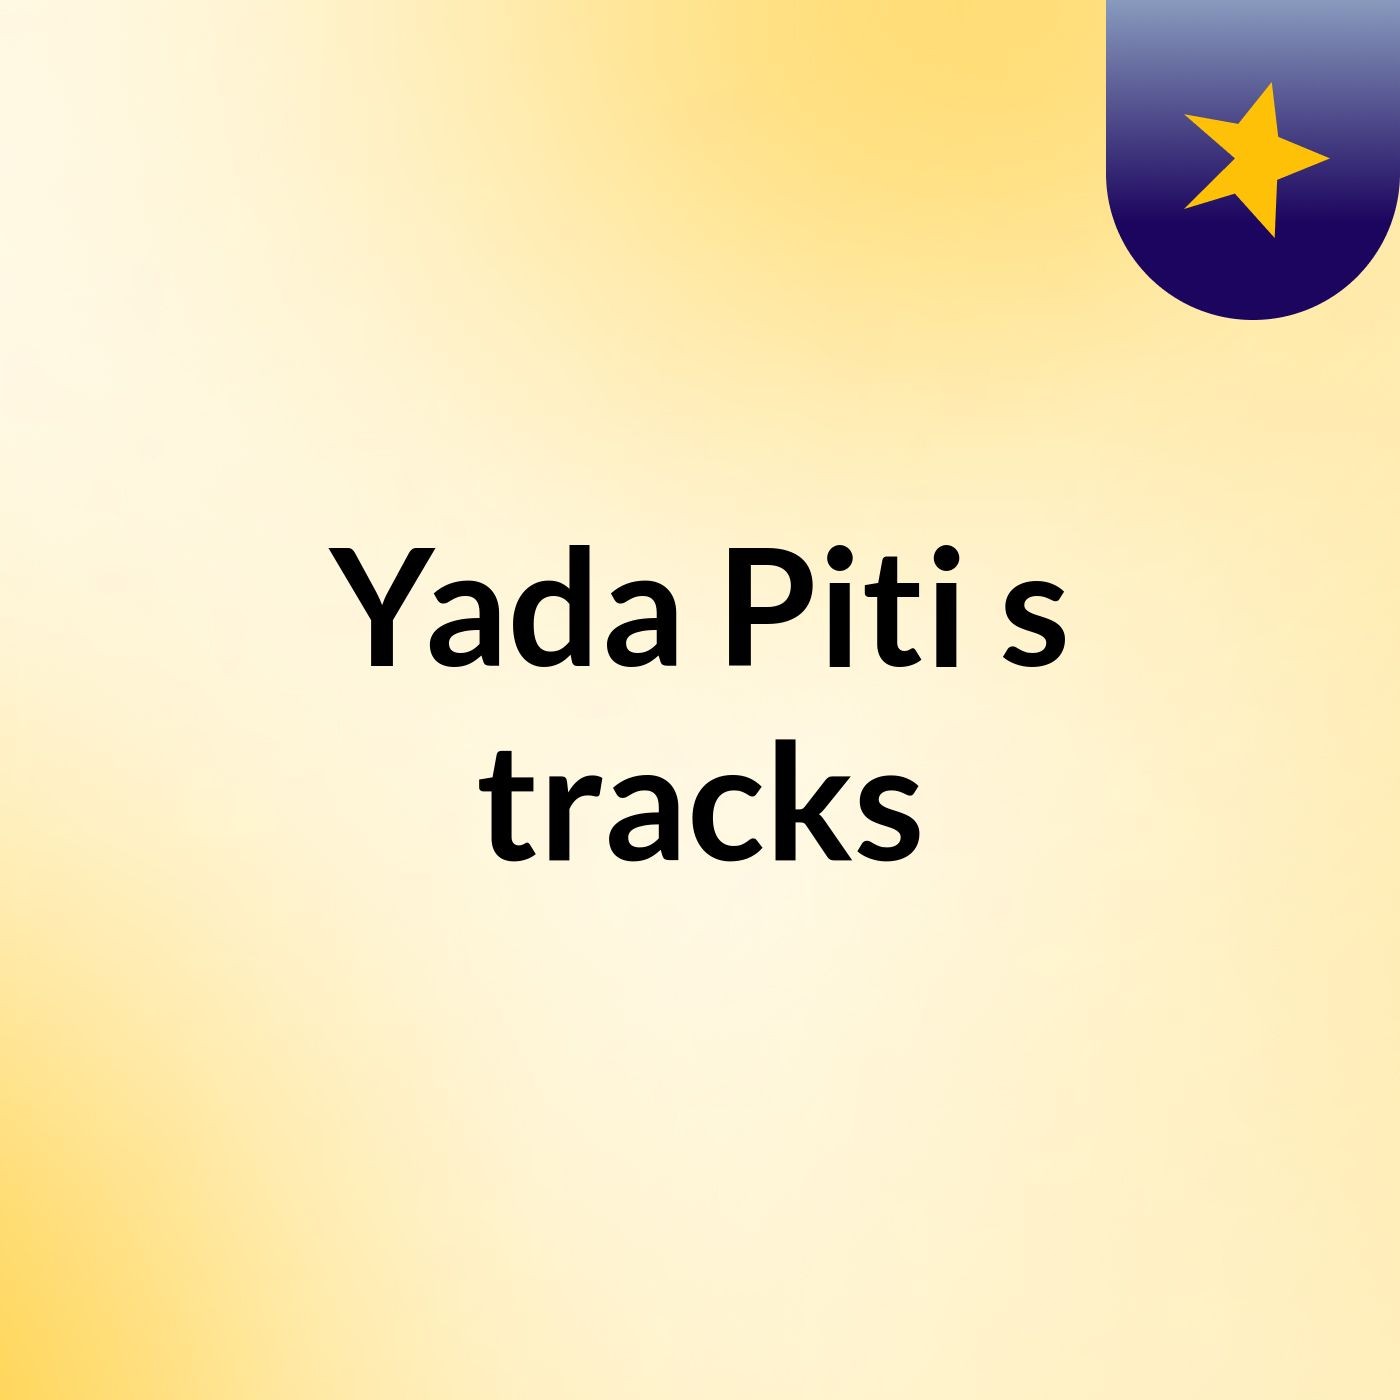 Yada Piti's tracks